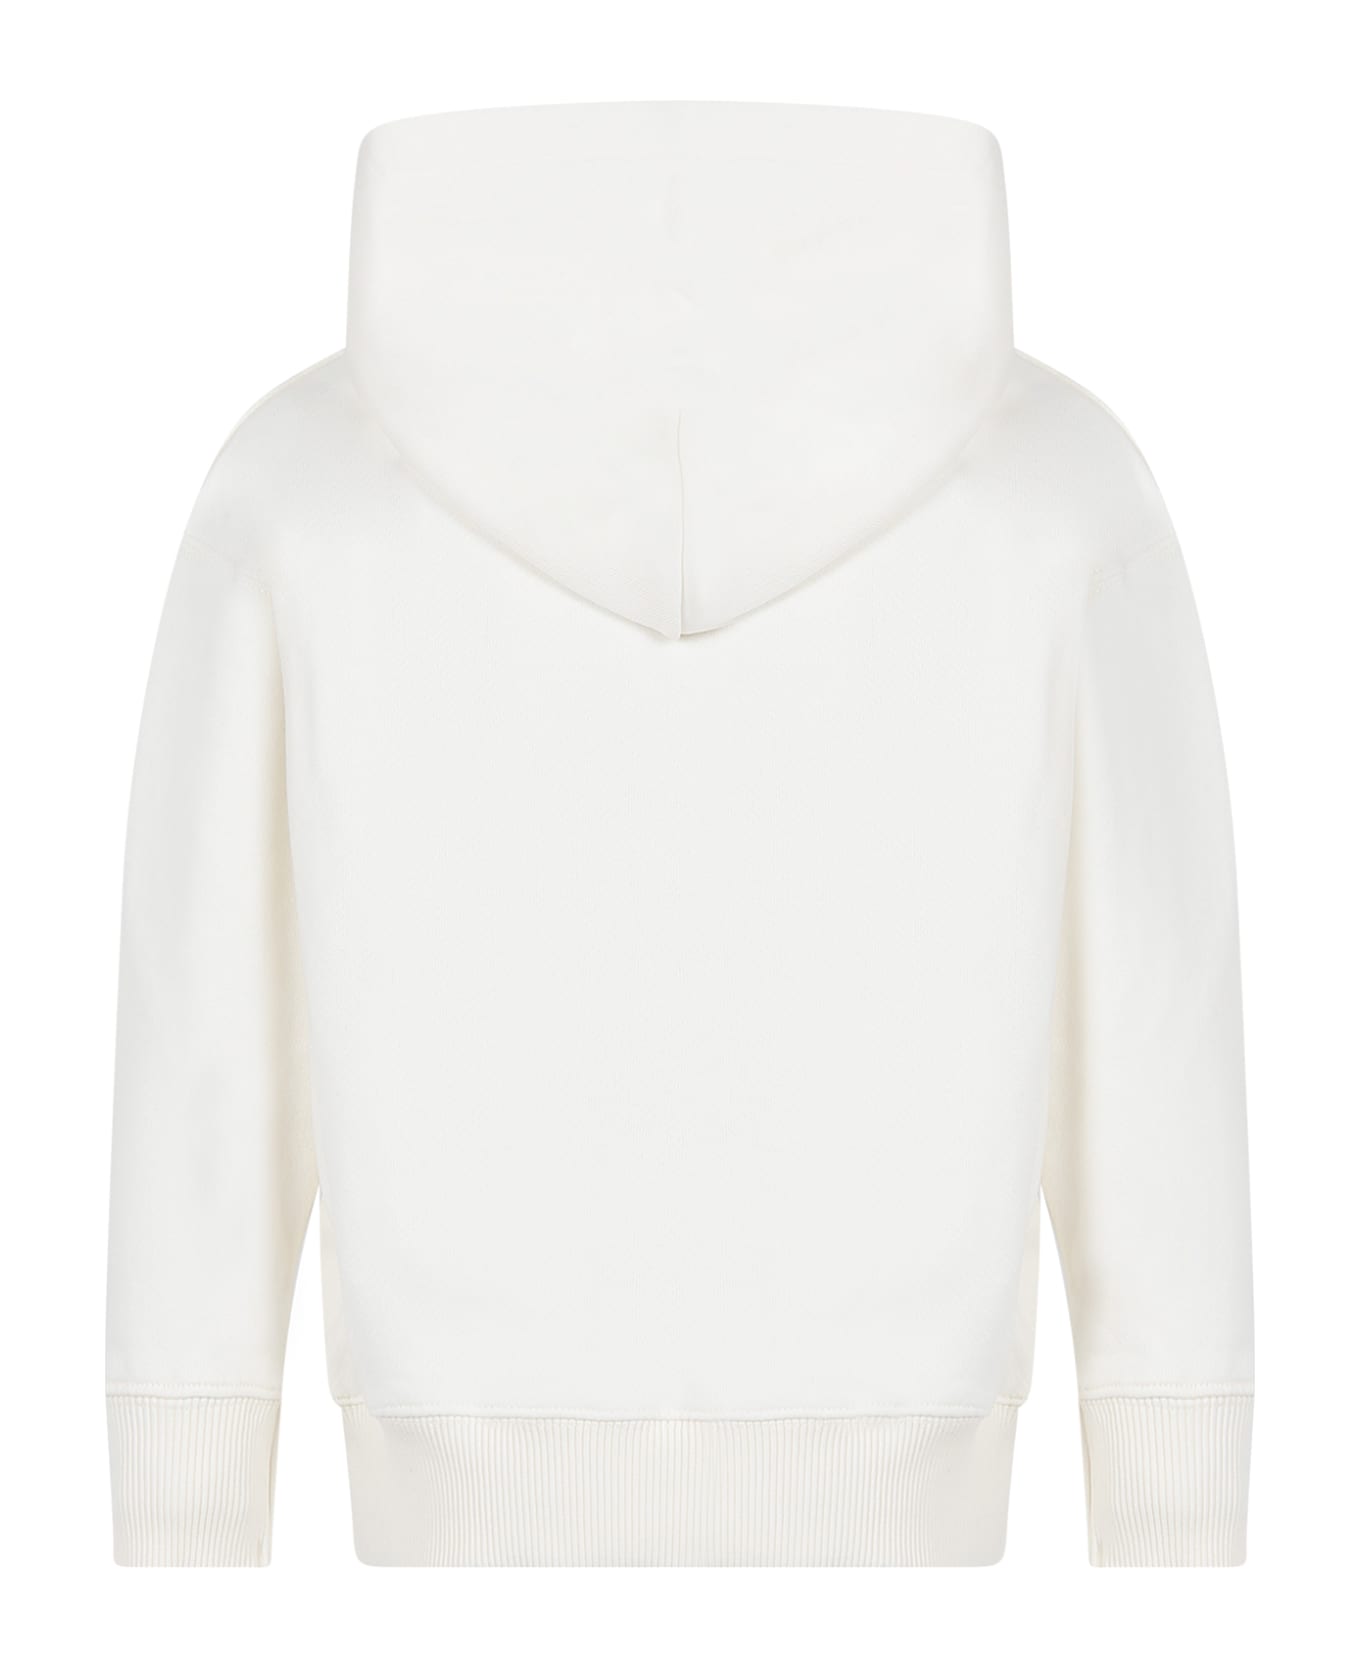 Off-White White Sweatshirt For Kids With Logo - WHITE ニットウェア＆スウェットシャツ